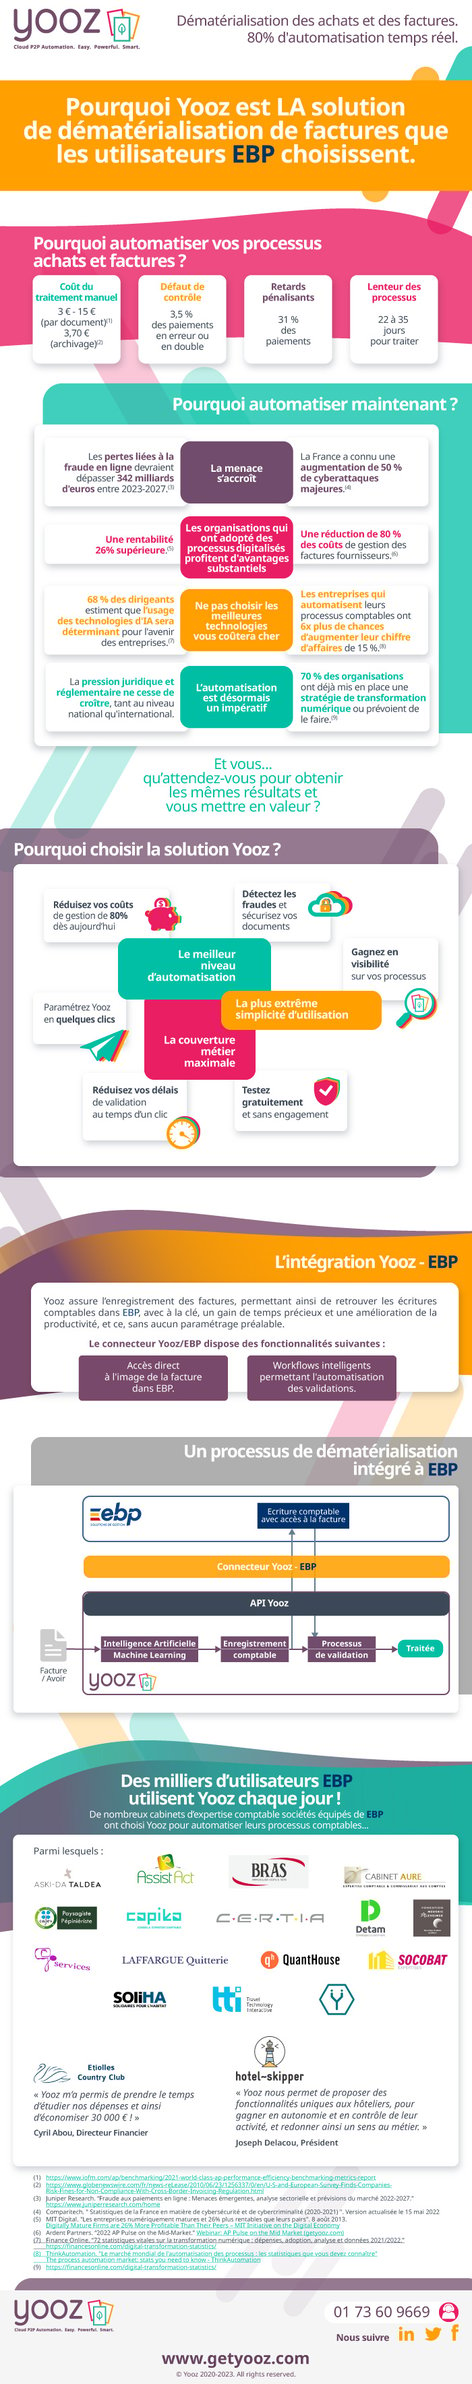 Yooz-Infographie-Integration-EBP-v05